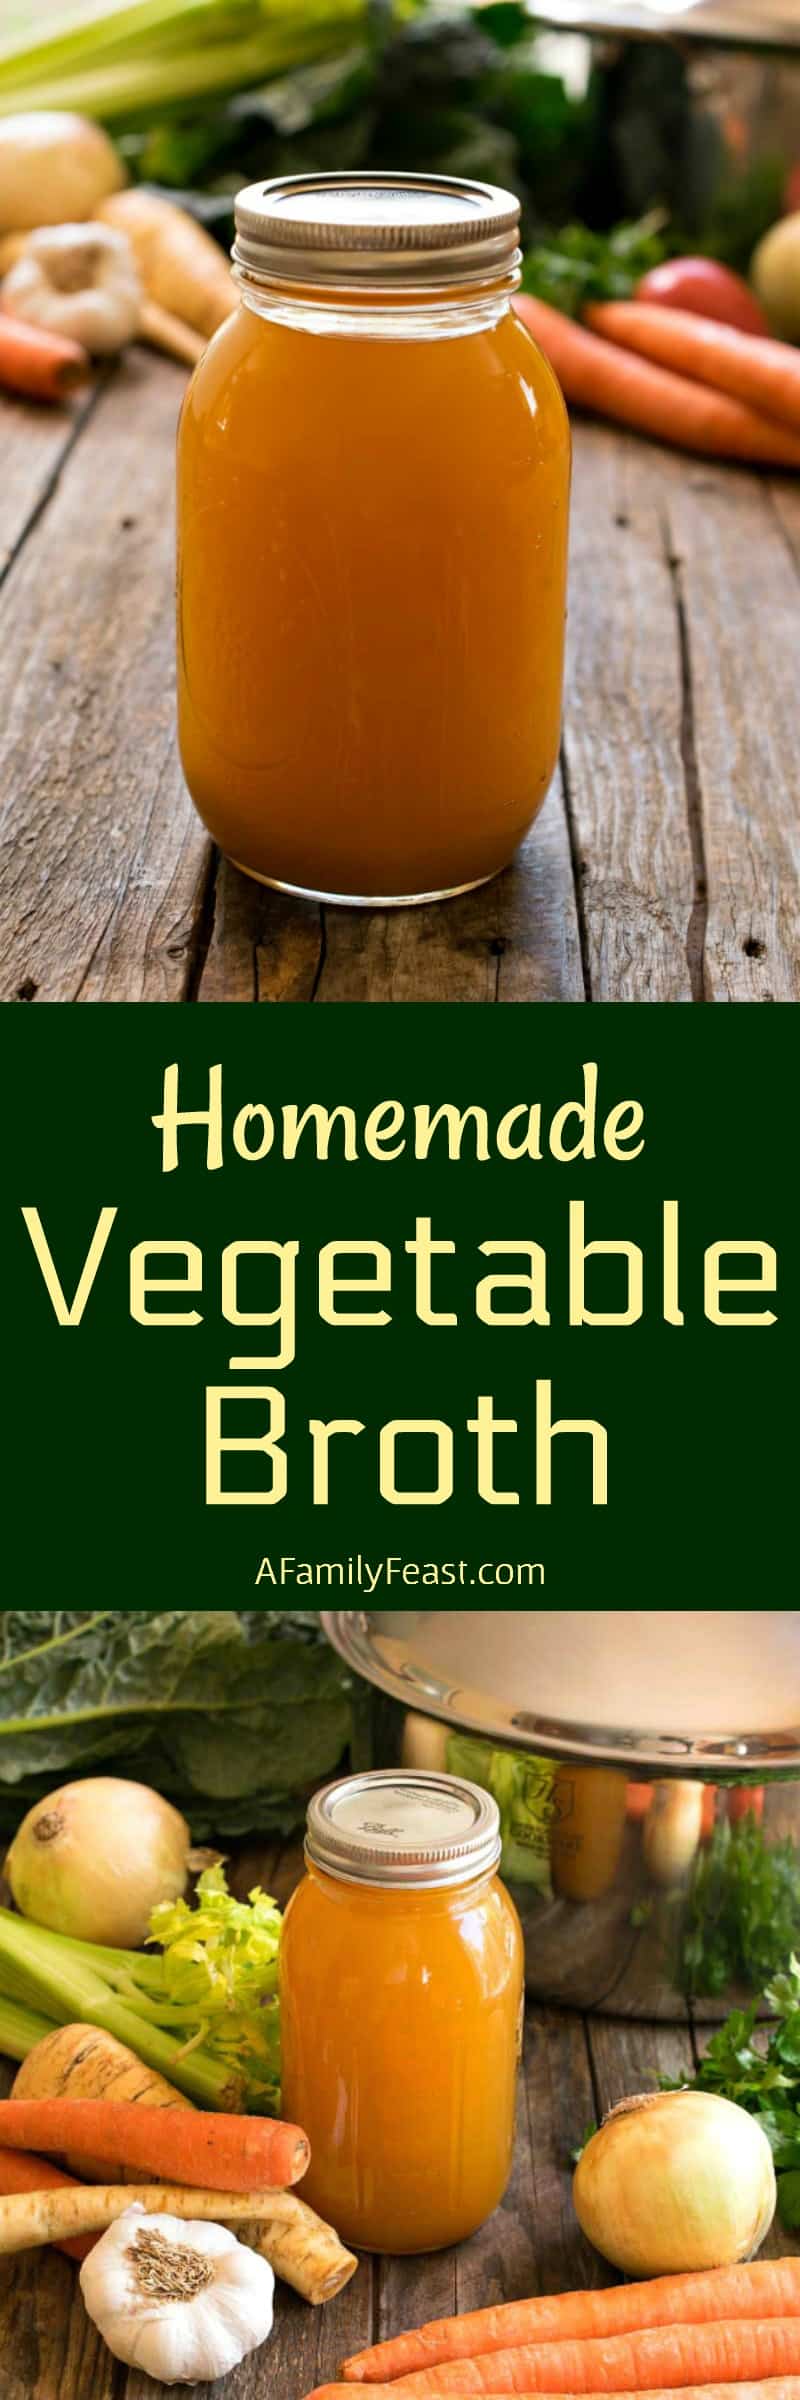 How to make homemade Vegetable Broth